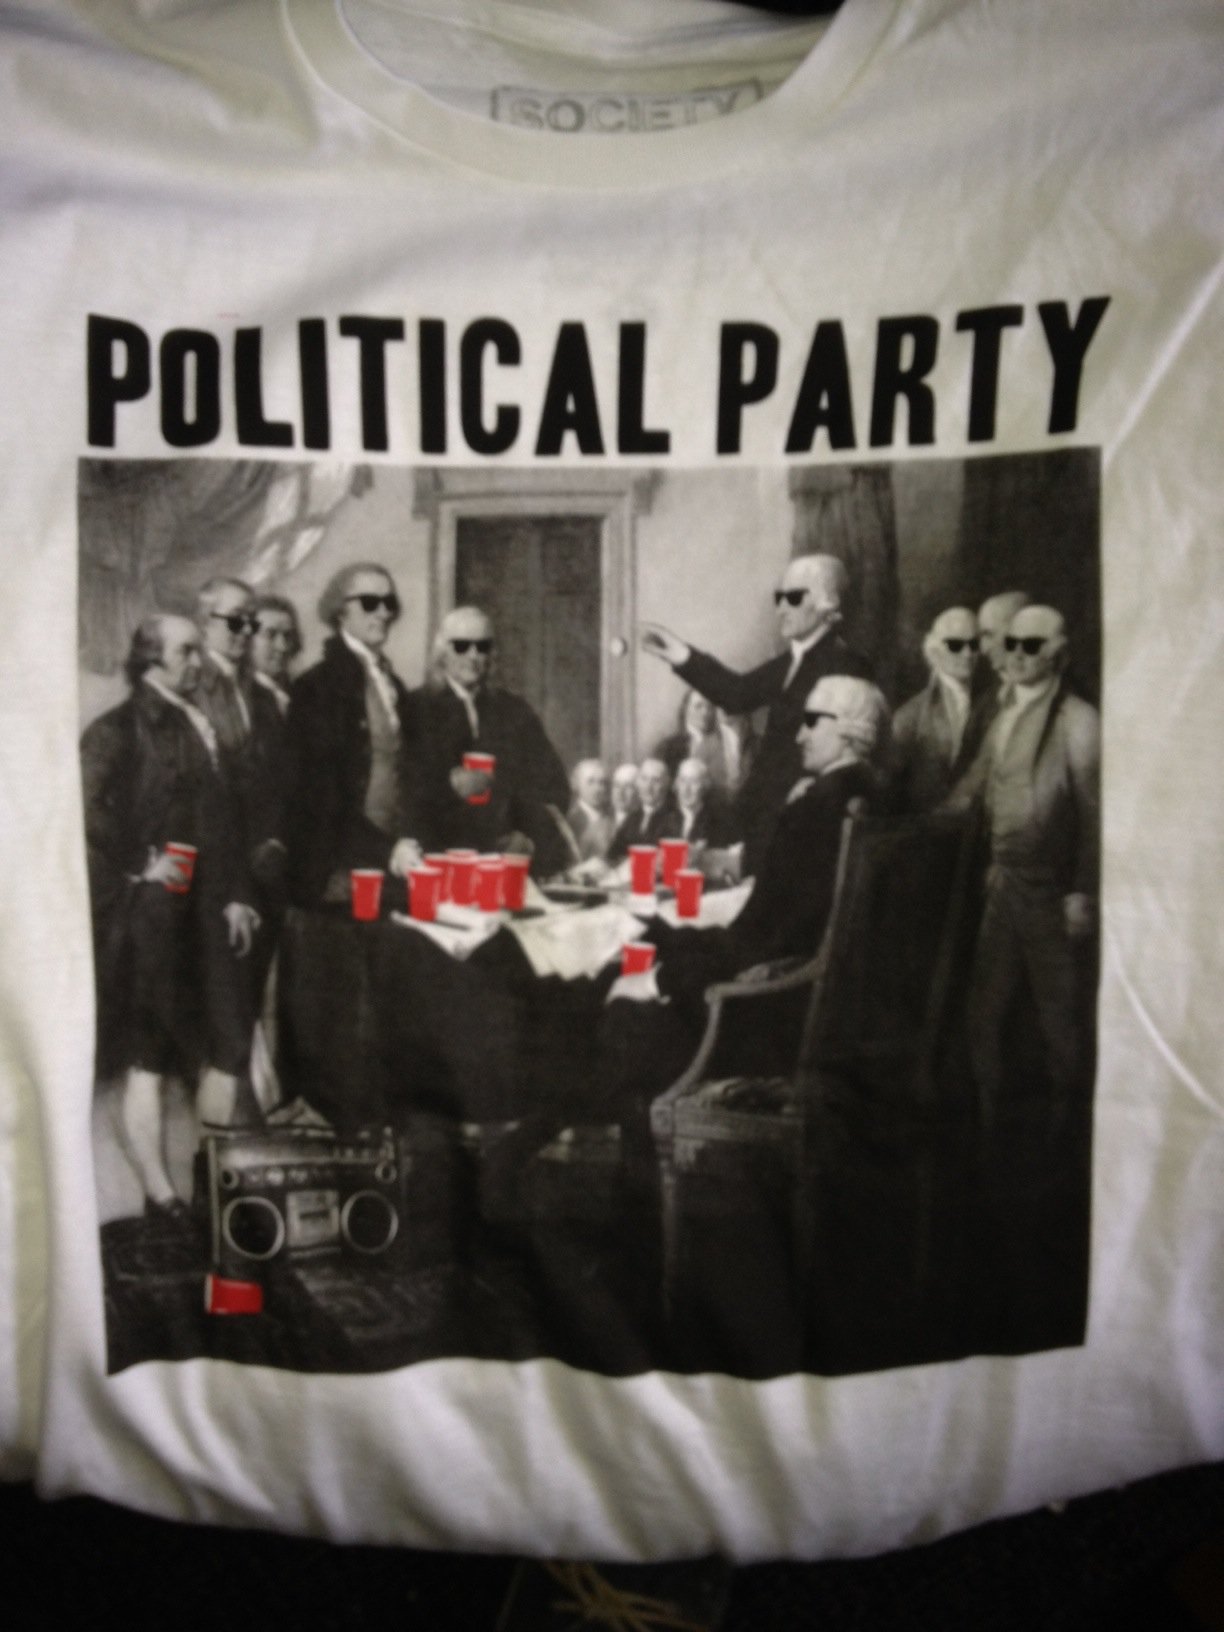 Political Party